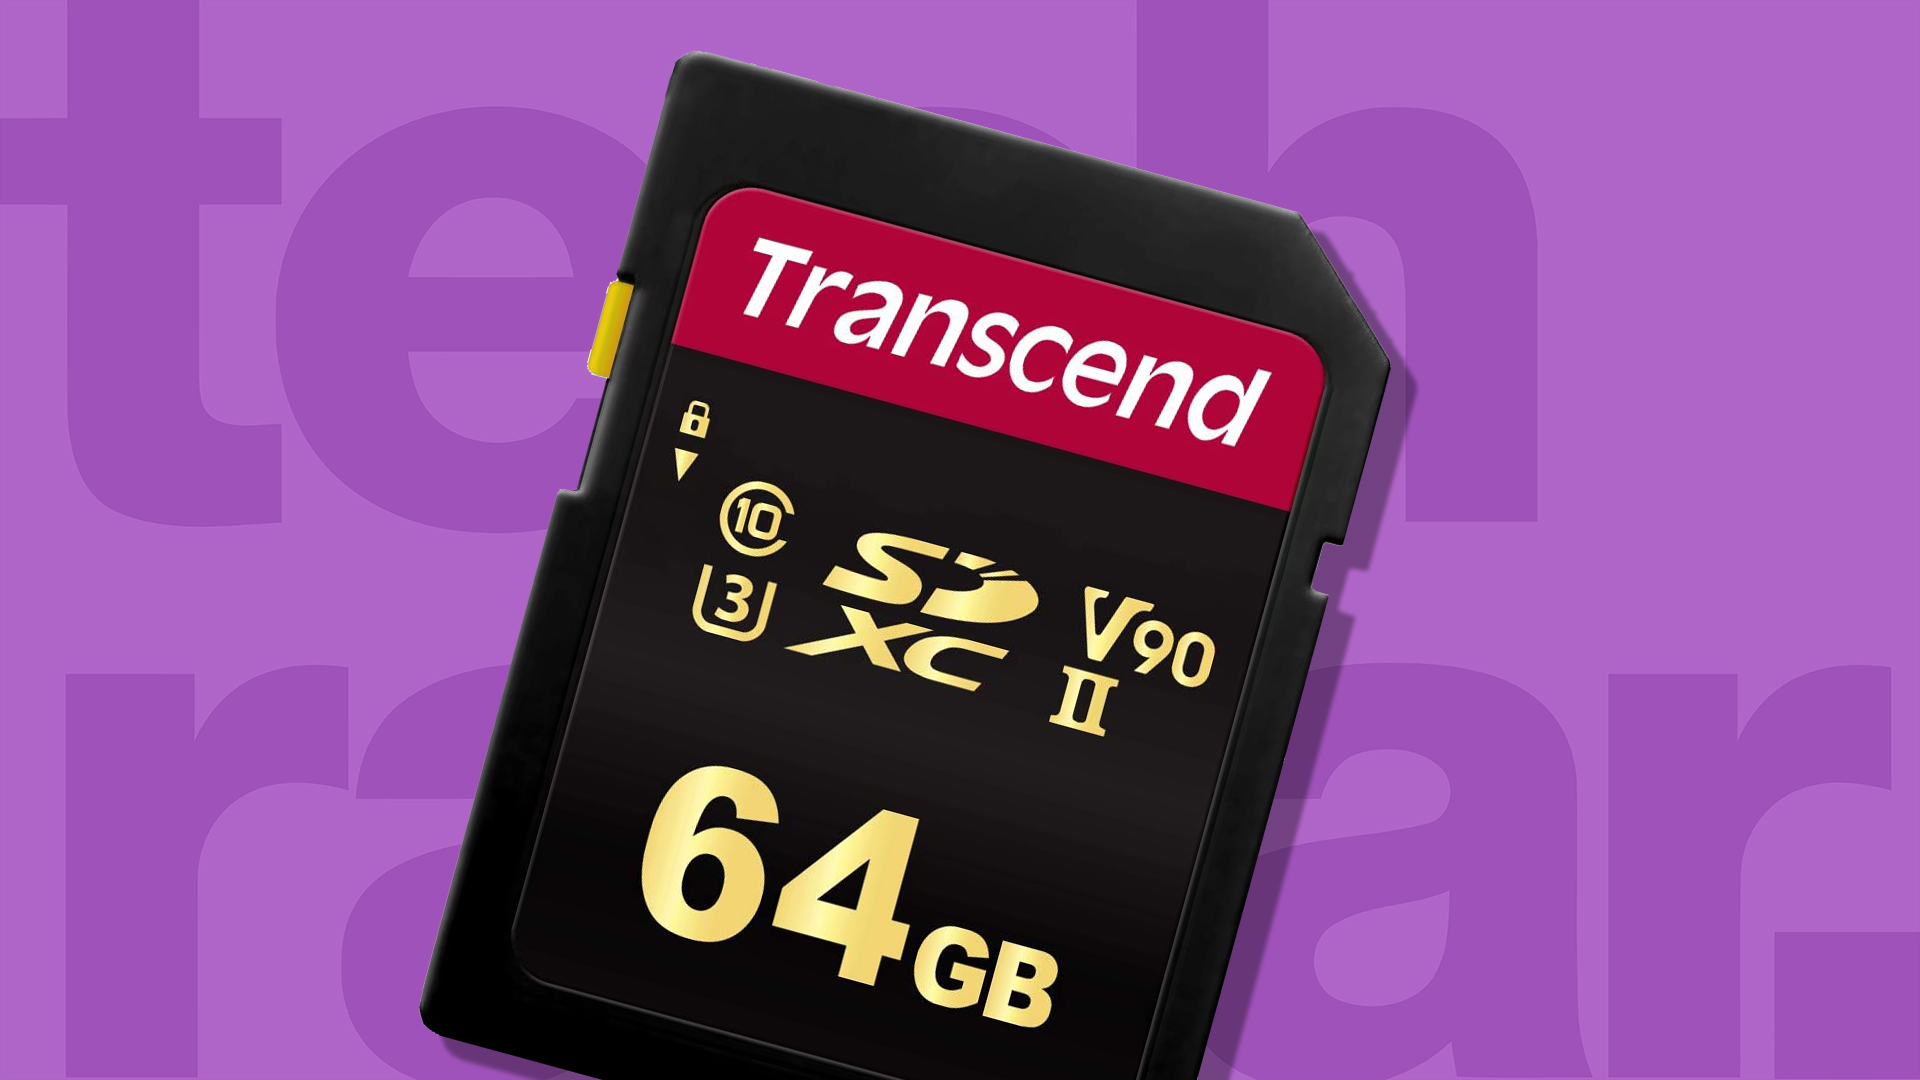 Premium High Speed Micro SD Card microSDXC V30 UHS-I U3